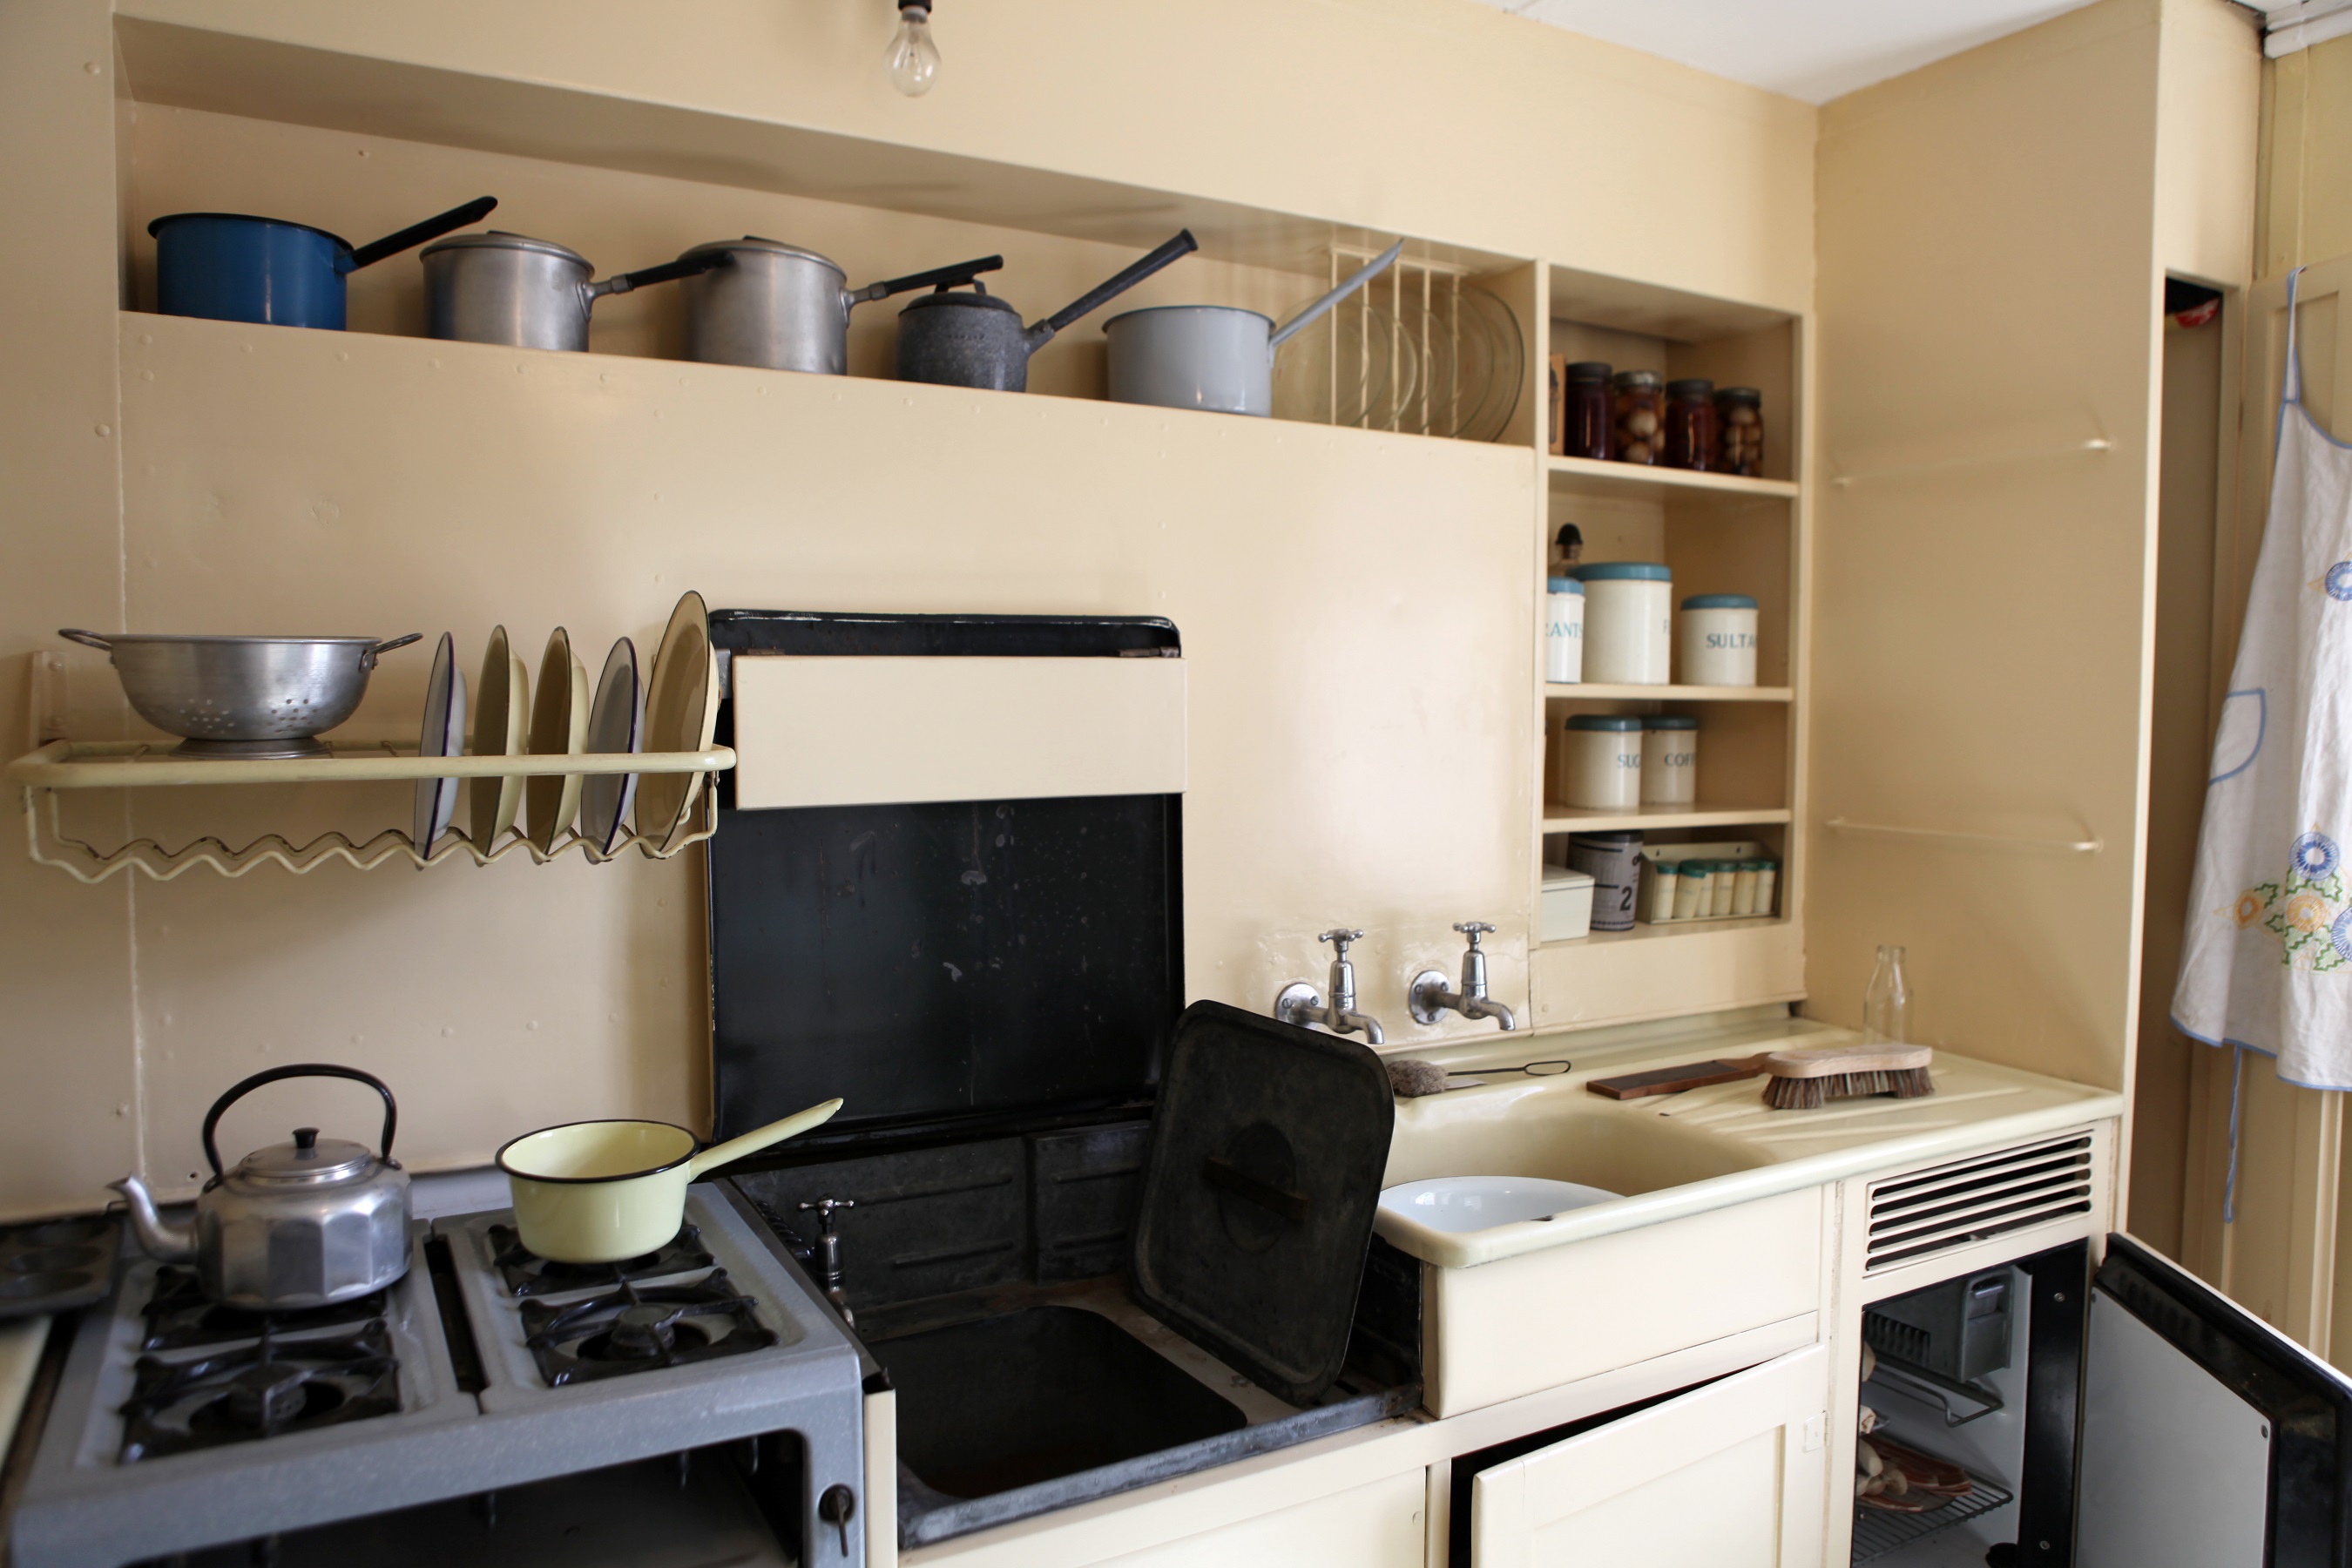 Kitchen of an AIROH prefab, St Fagans National Museum